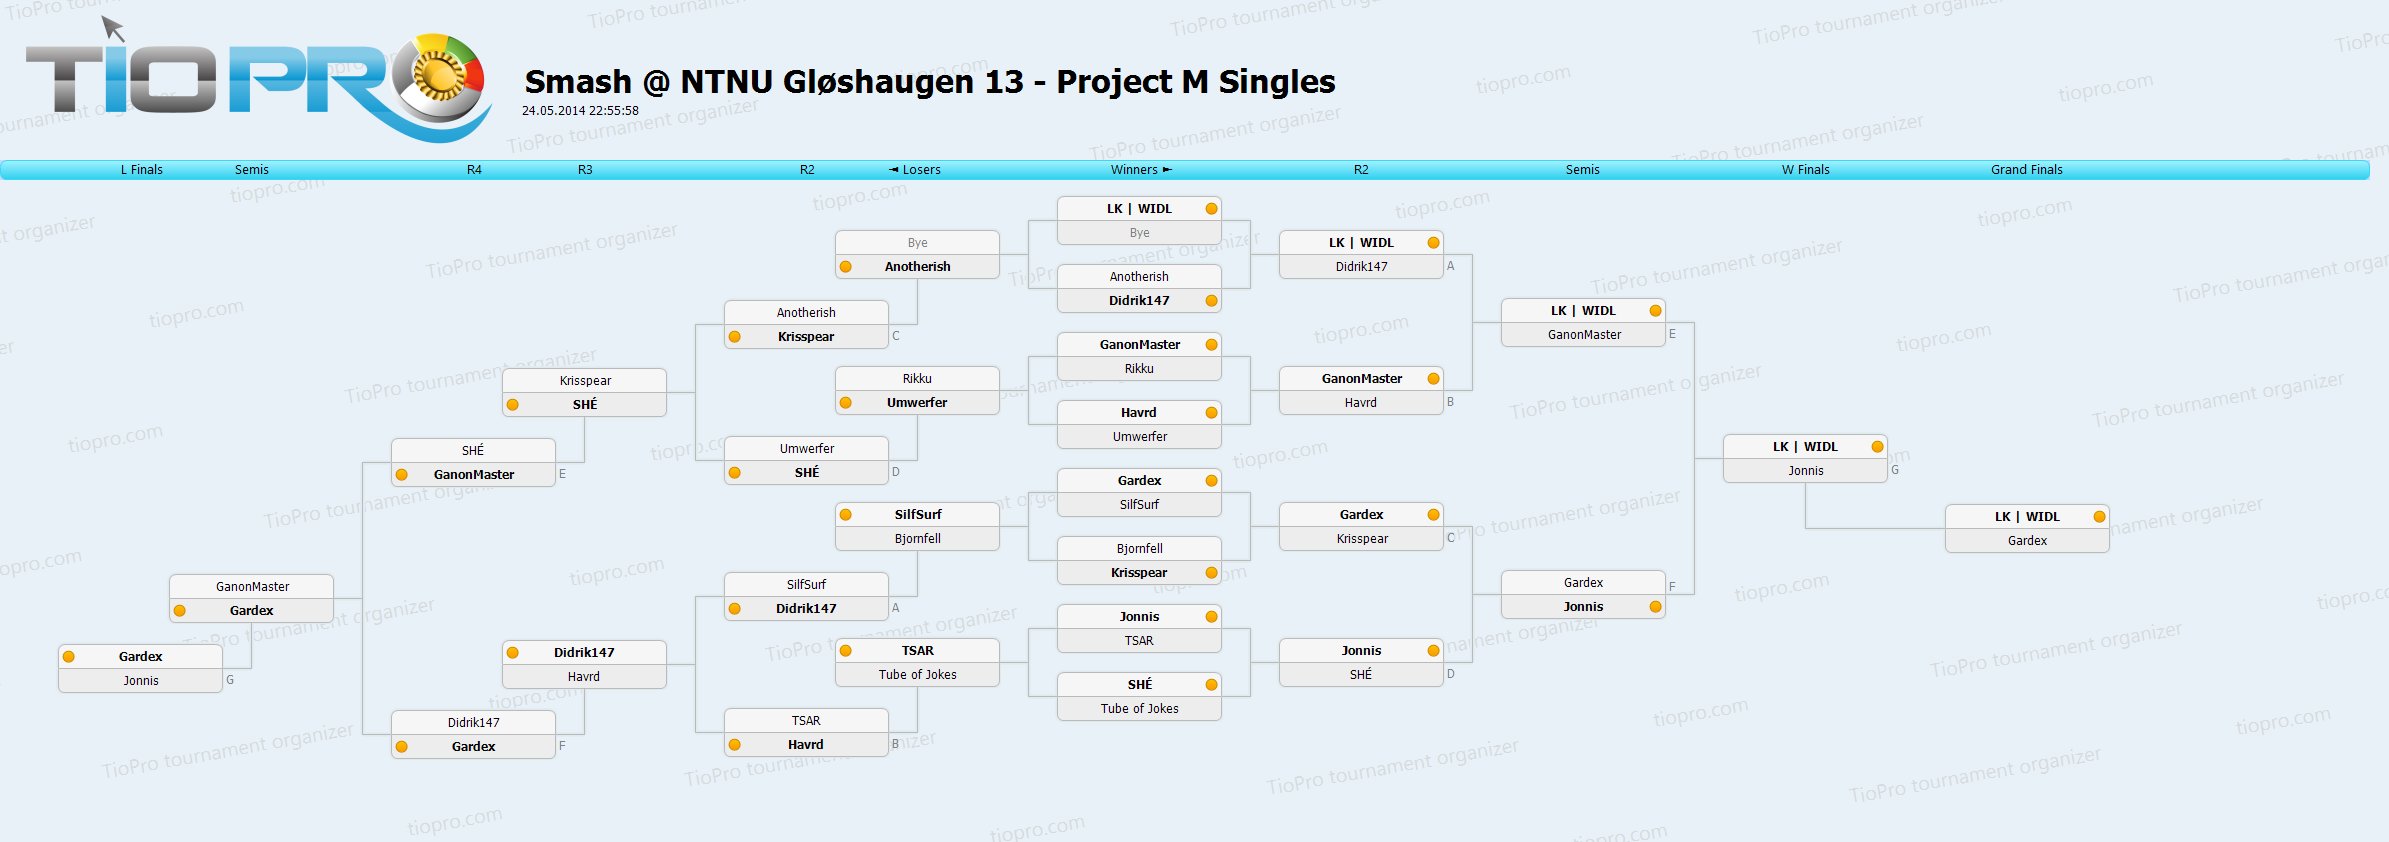 S@NG 24.05.2014 - Project M Singles